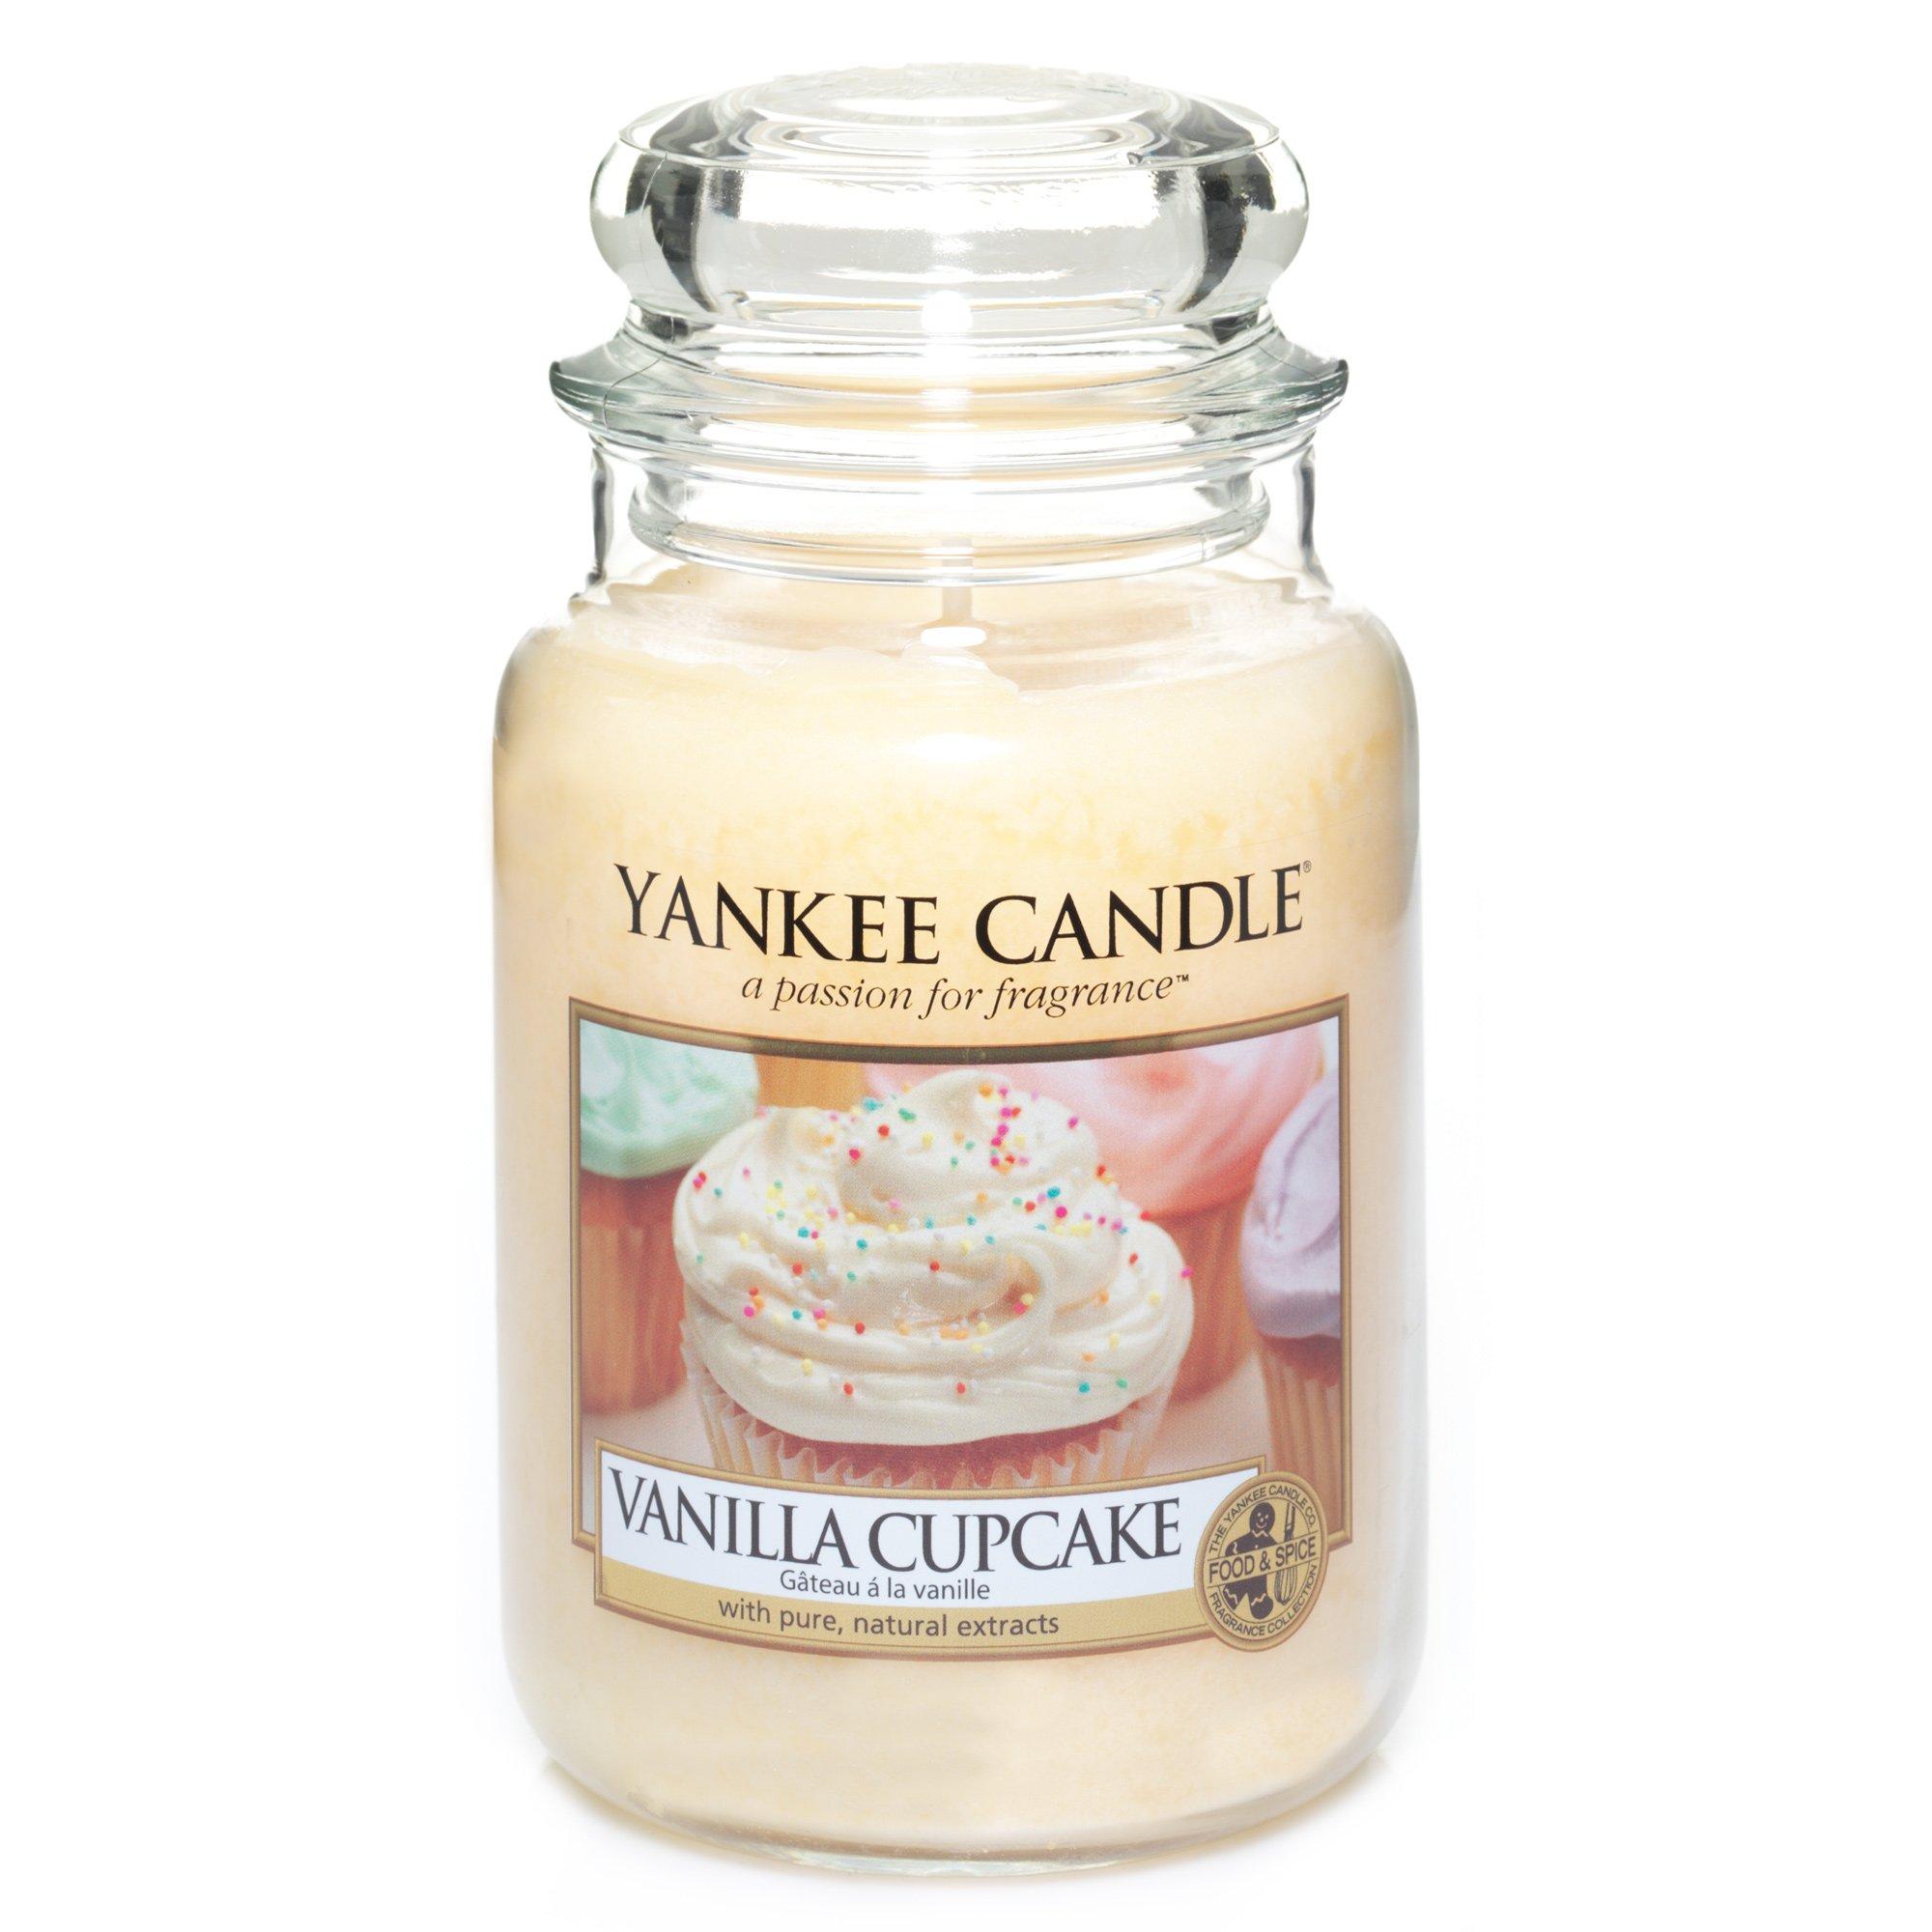 Yankee Candle Vanilla Cupcake bougie parfumée